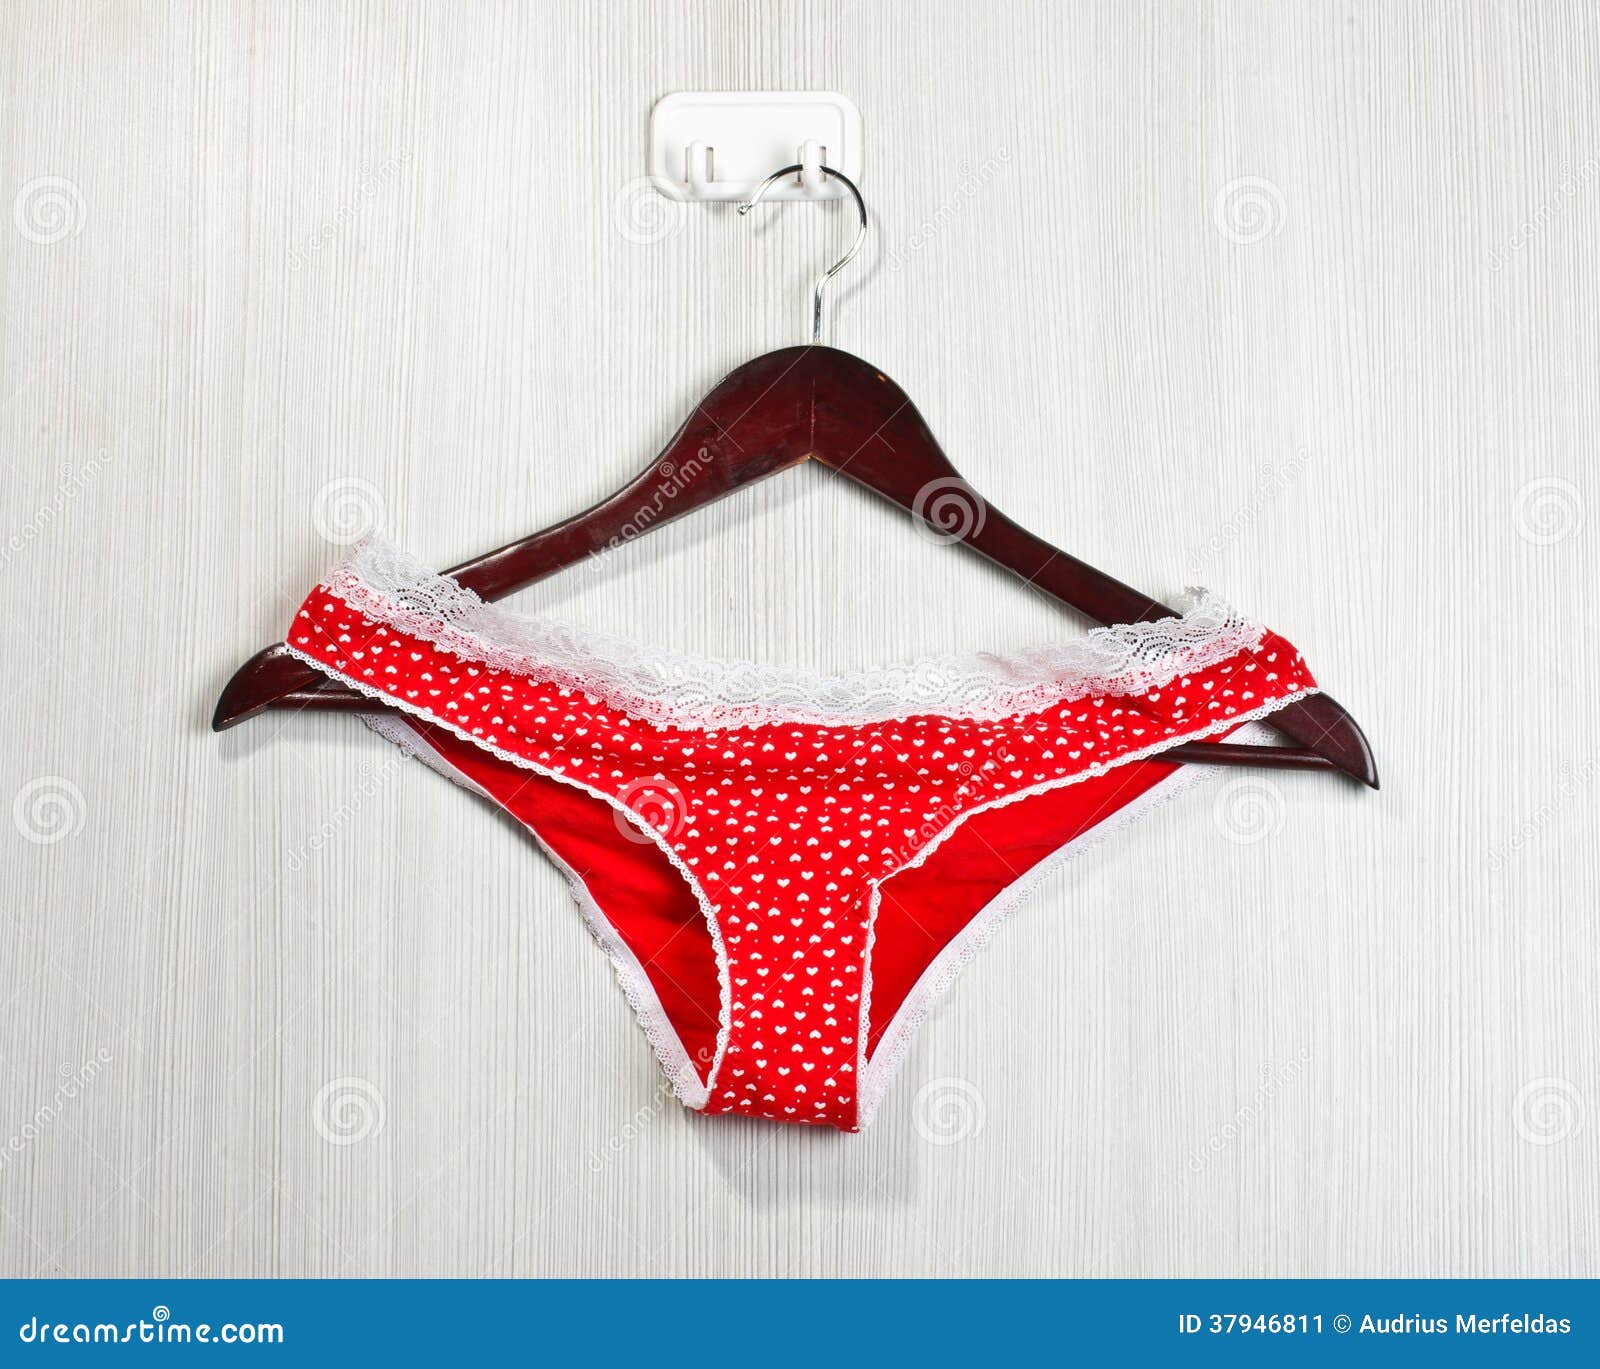 Red Female Underwear Valentine Day Present Stock Image - Image of fantasy,  charm: 37946811